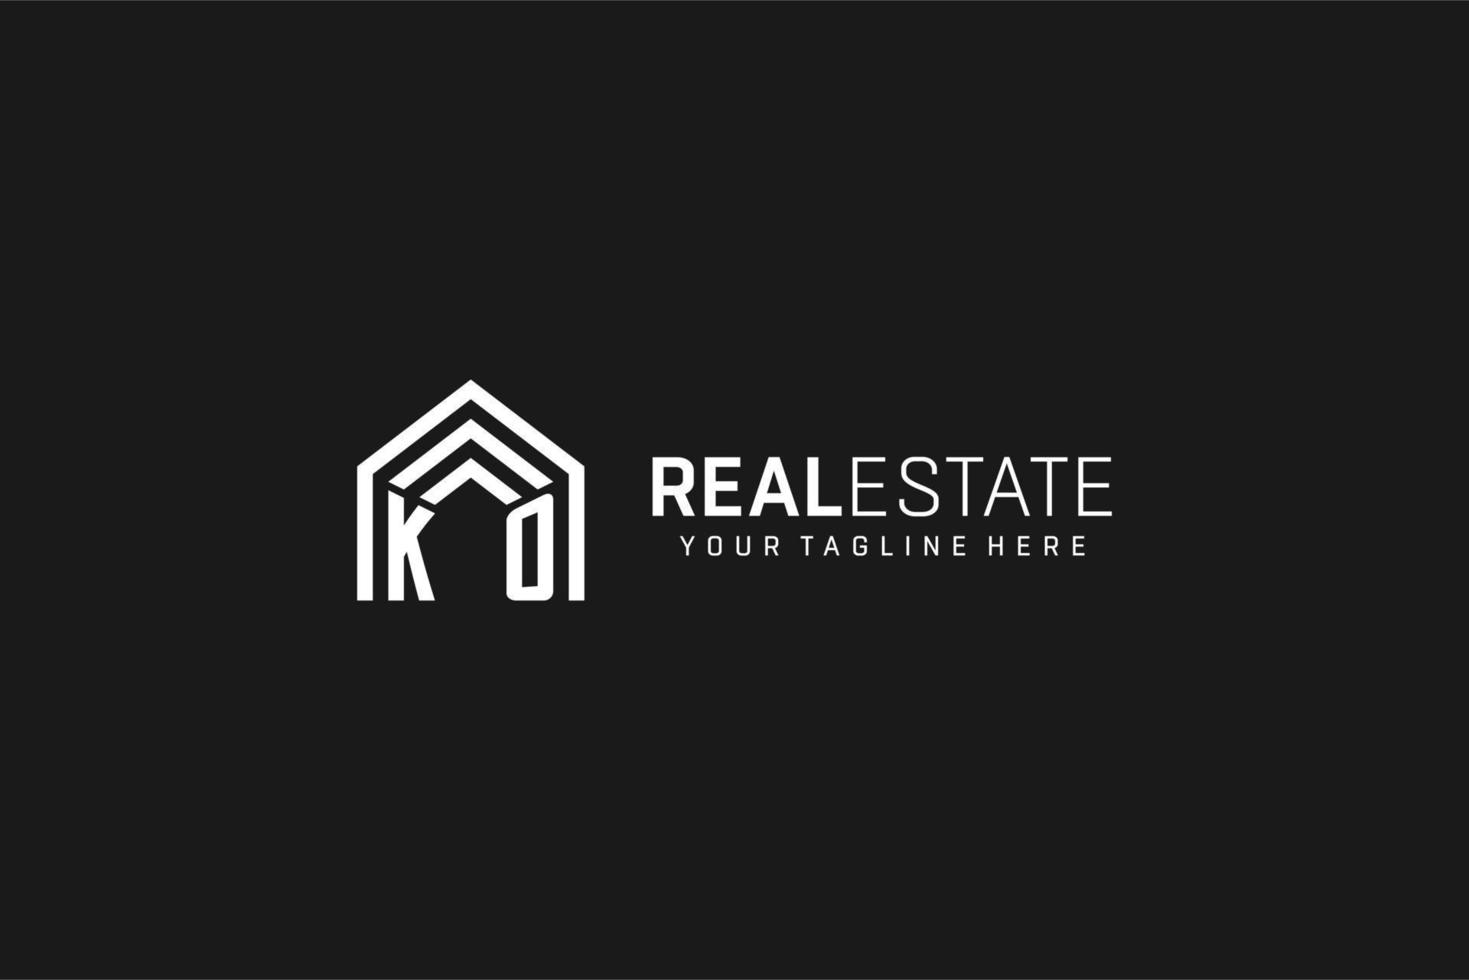 Letter KO house roof shape logo, creative real estate monogram logo style vector